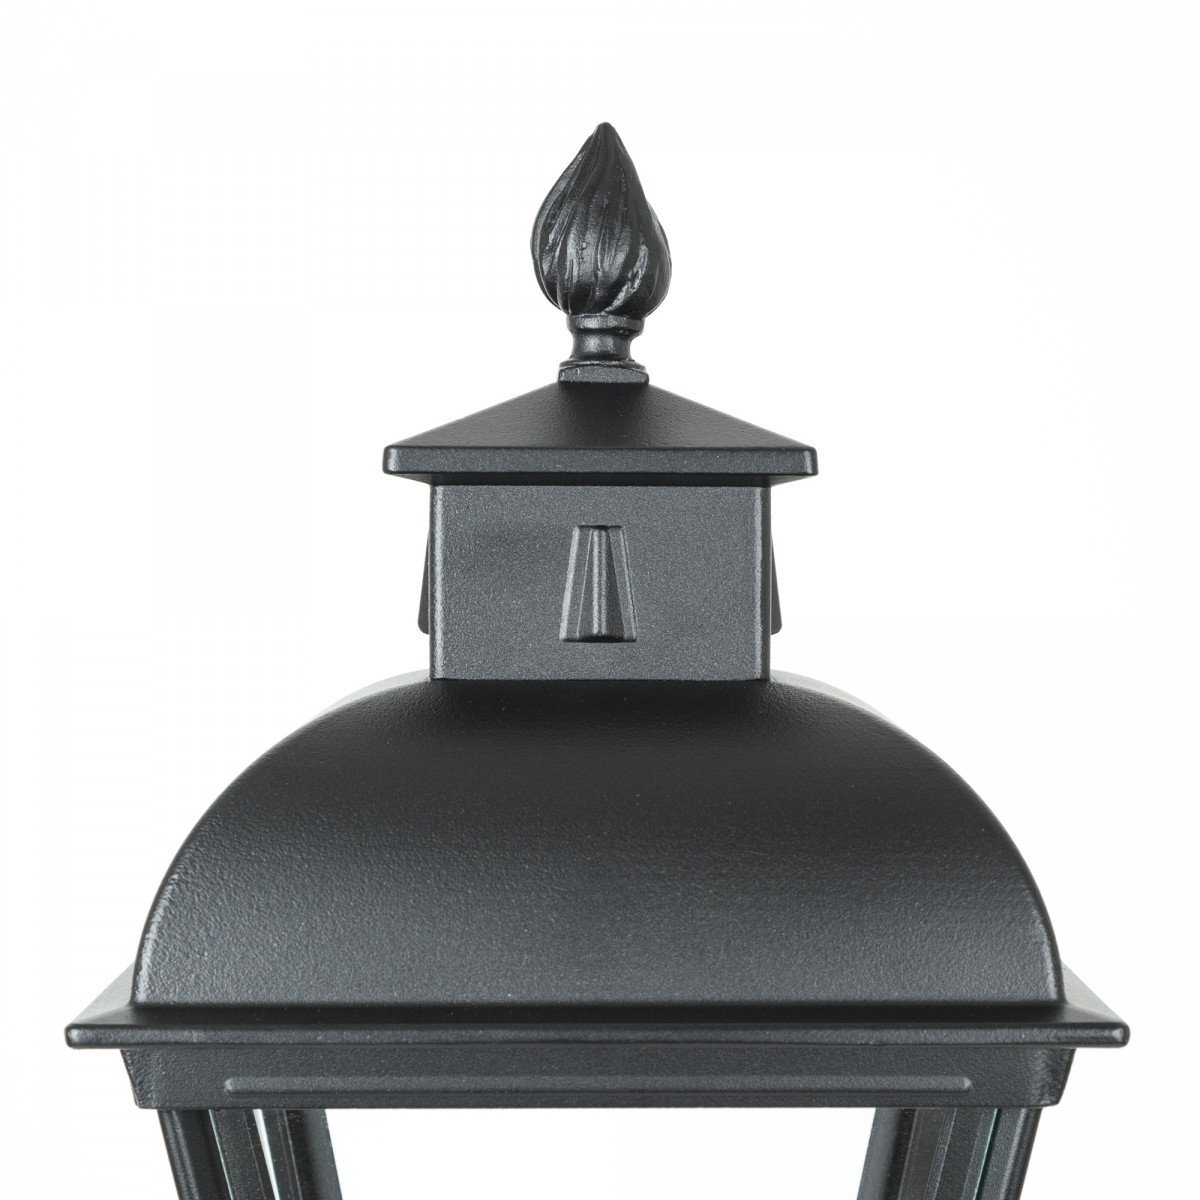 Klassische Sockellampe Vondel Sokkel in quadratischer Form und schönen Details in schwarzer Farbe